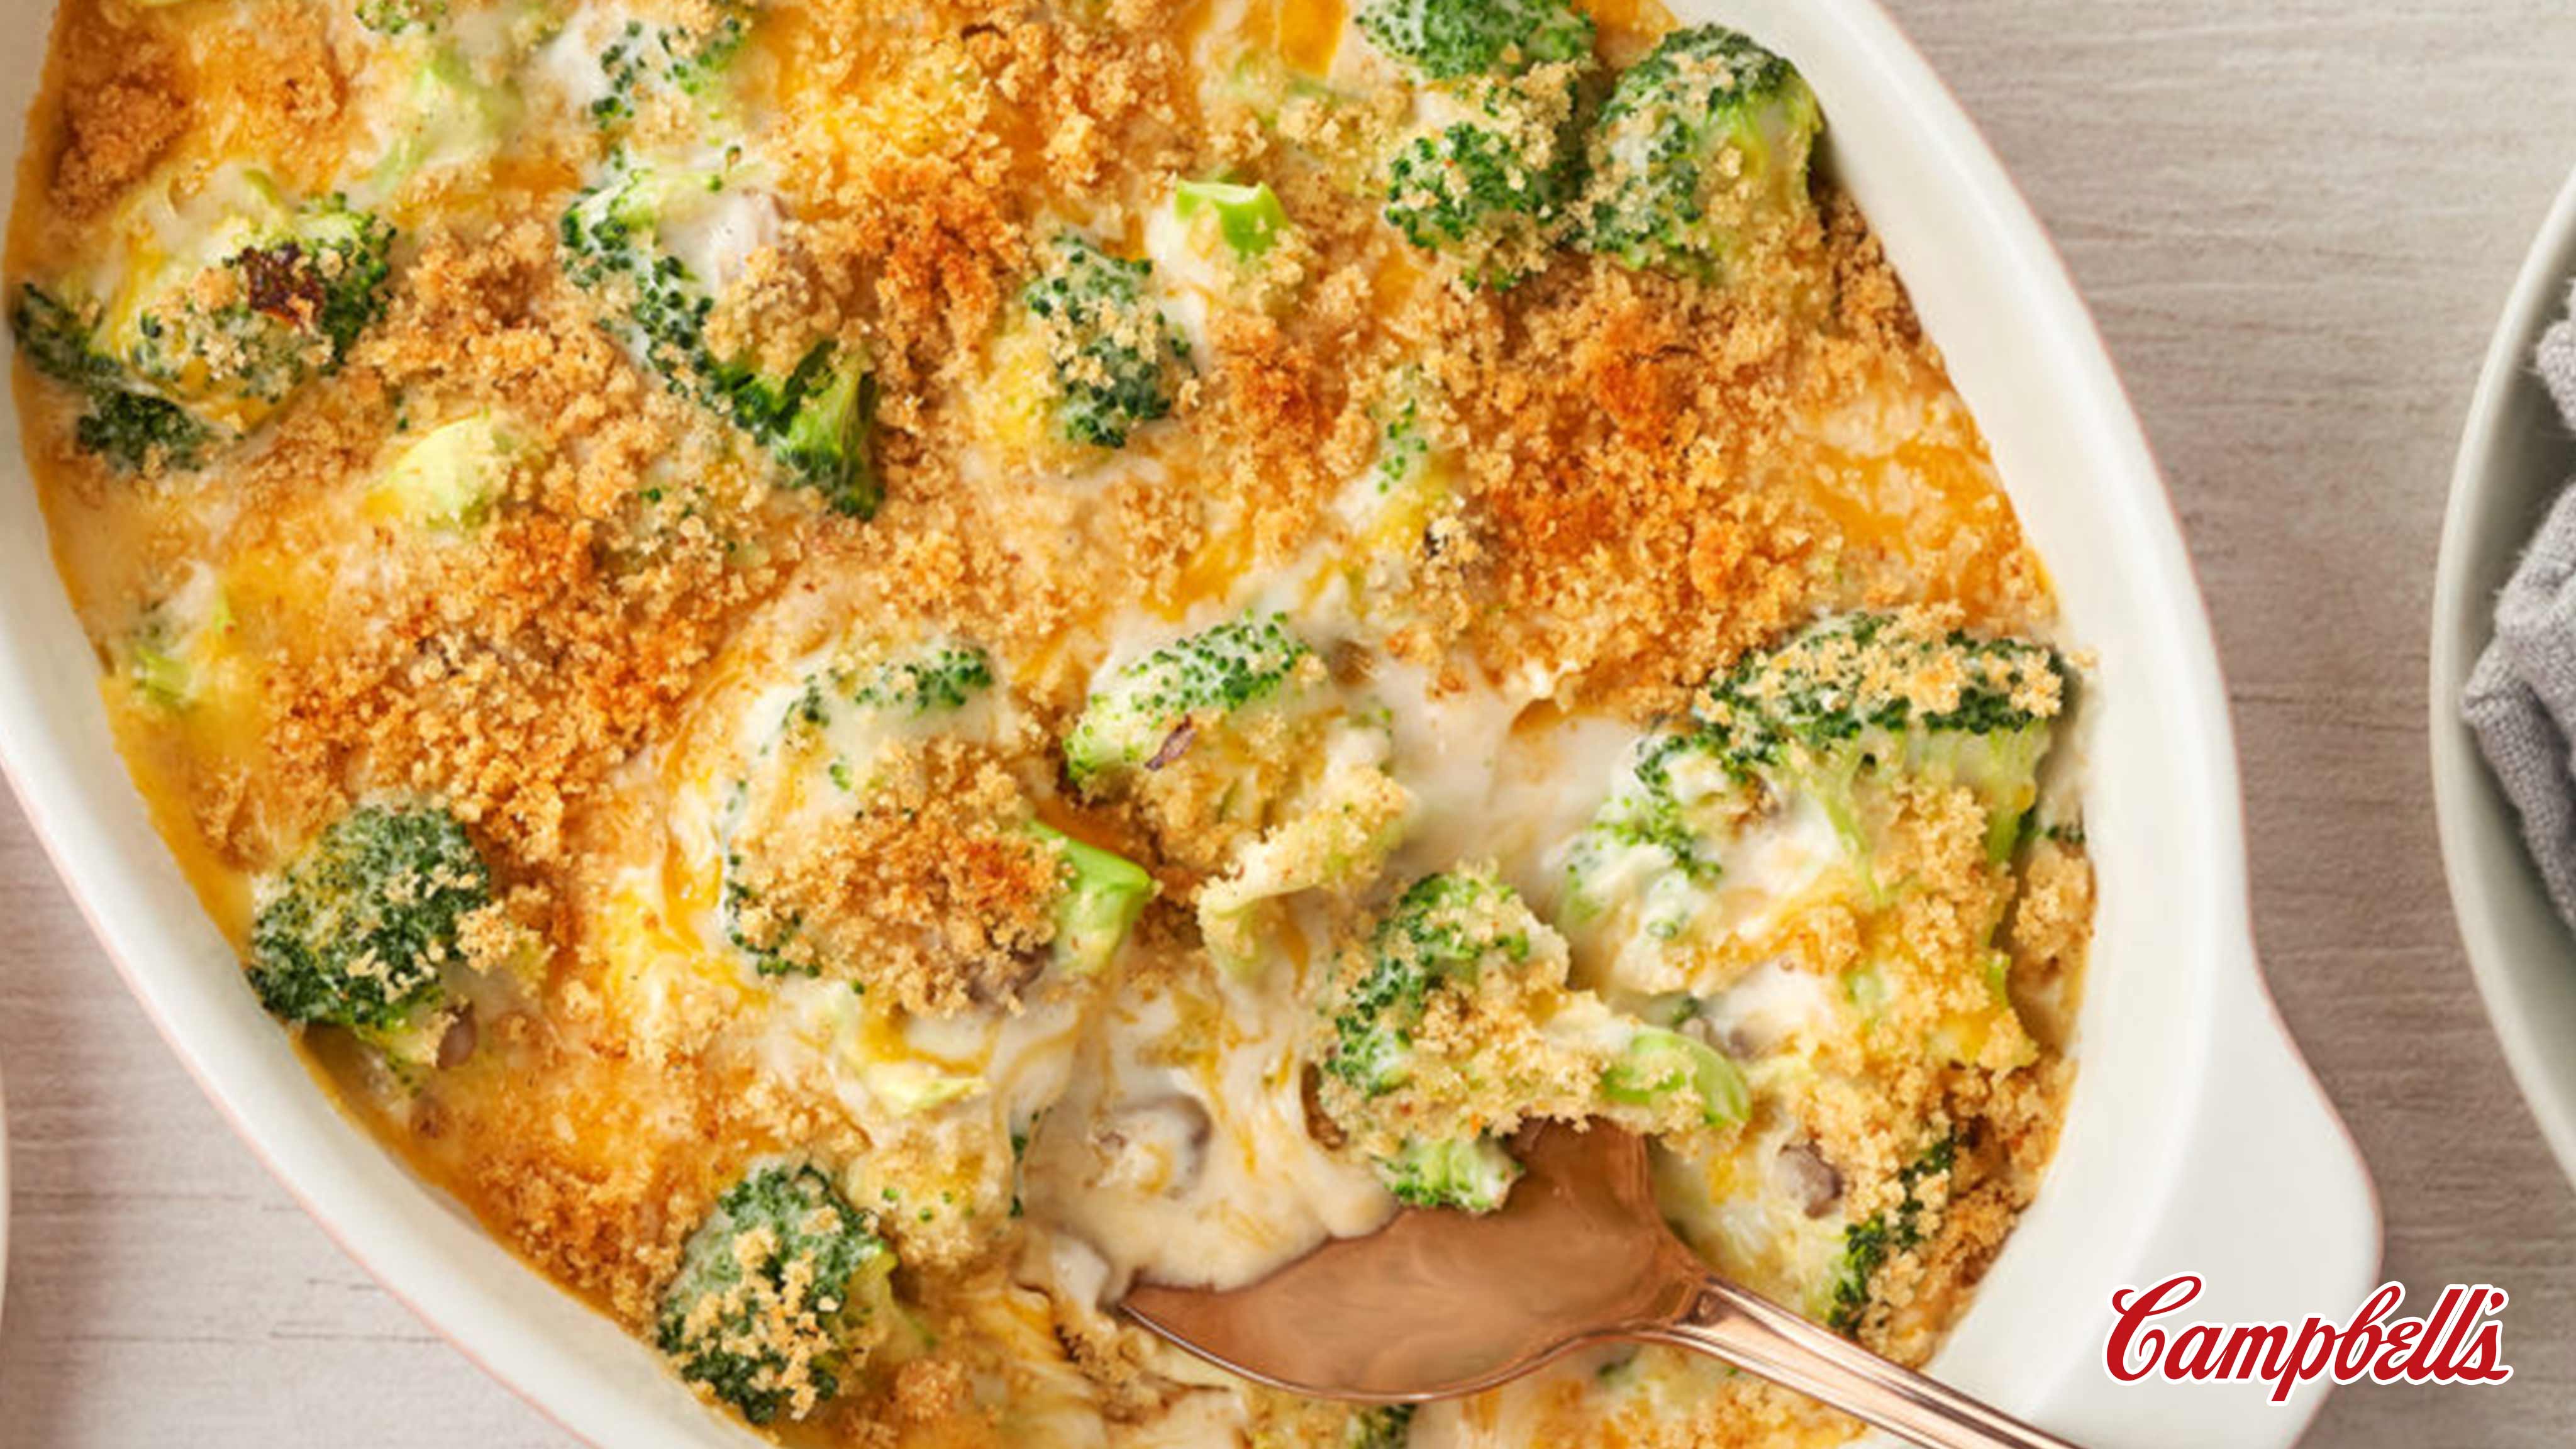 Image for Recipe Broccoli and Cheese Casserole